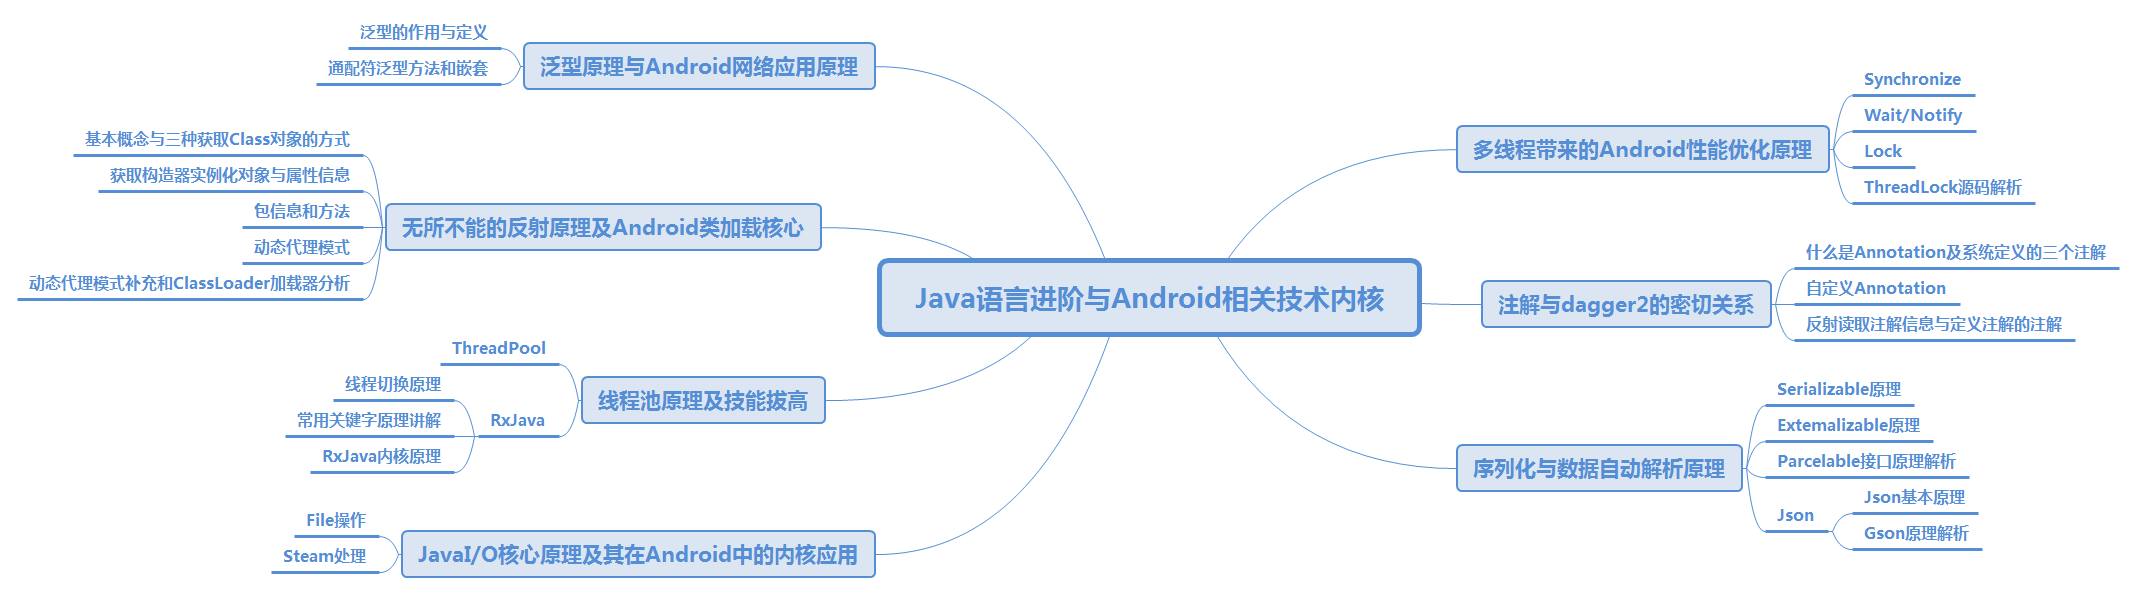 Java语言进阶与Android相关技术内核.png